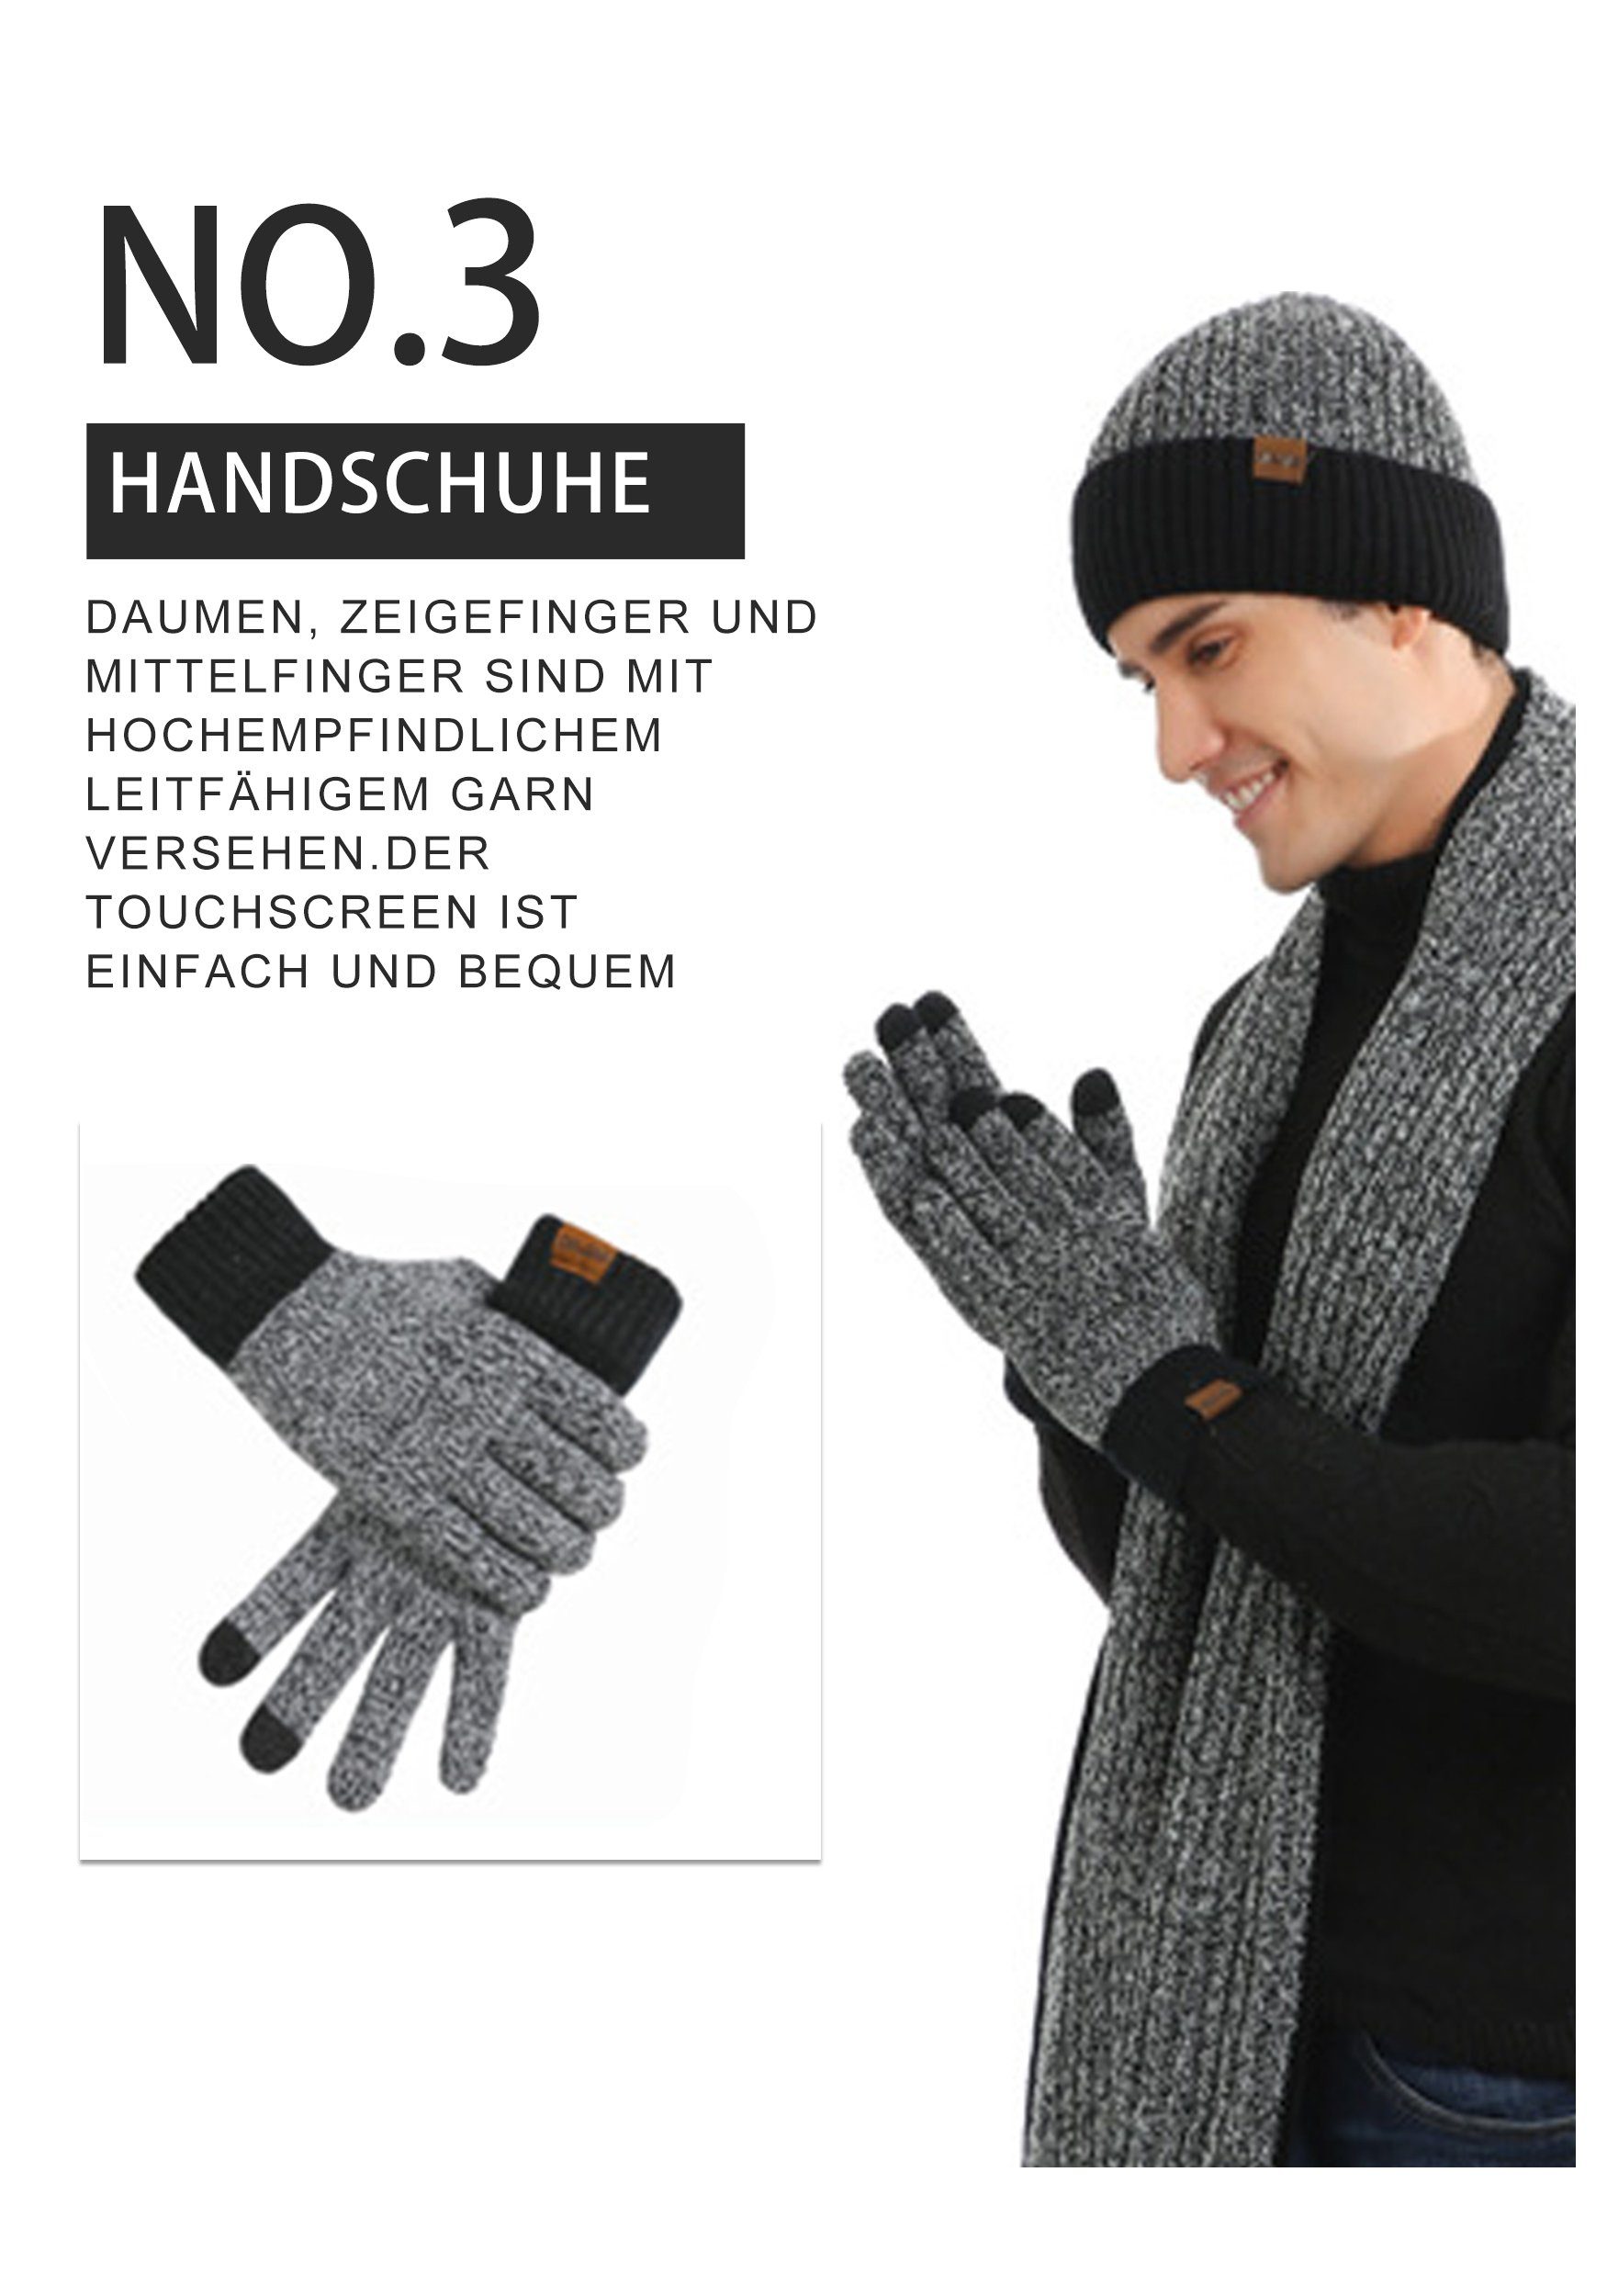 MAGICSHE Strickmütze Winter Weich Stück Hut warm Schal verdickte Handschuhe schwarz drei Set